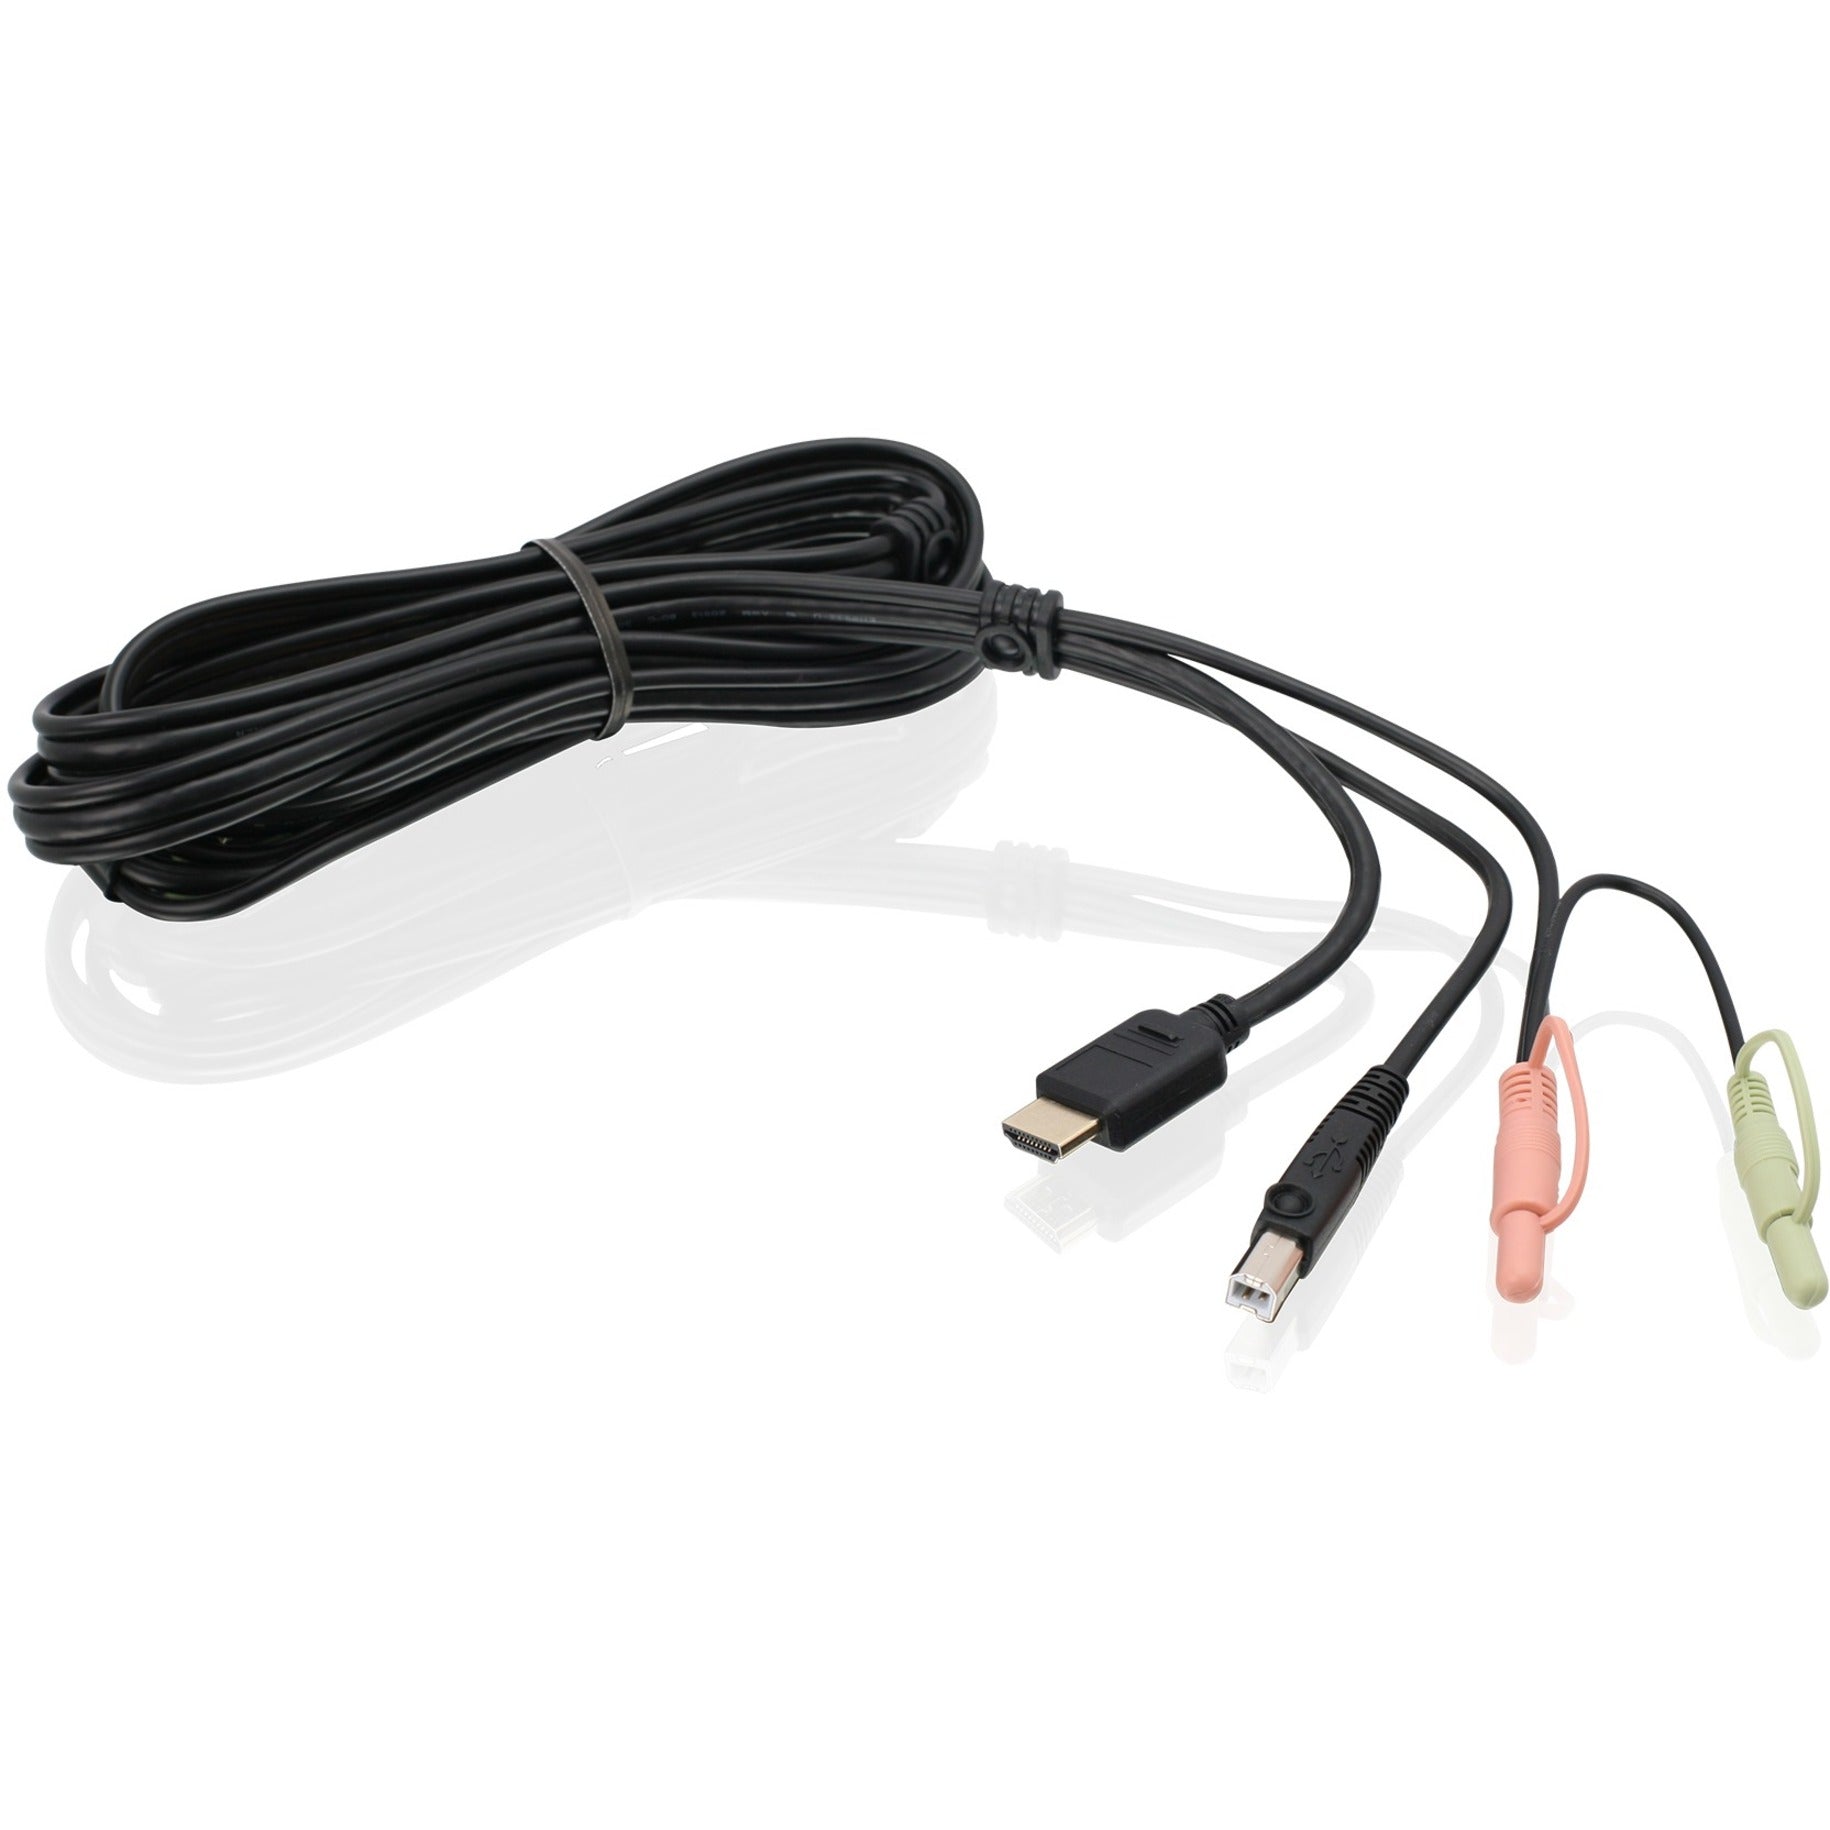 IOGEAR G2L802U 6ft HDMI KVM Cable with USB and Audio TAA Compliant  ブランド名: IOGEAR - 6ft: 6フィート - HDMI: HDMI - KVM Cable: KVMケーブル - USB: USB - Audio: オーディオ - TAA Compliant: TAA準拠